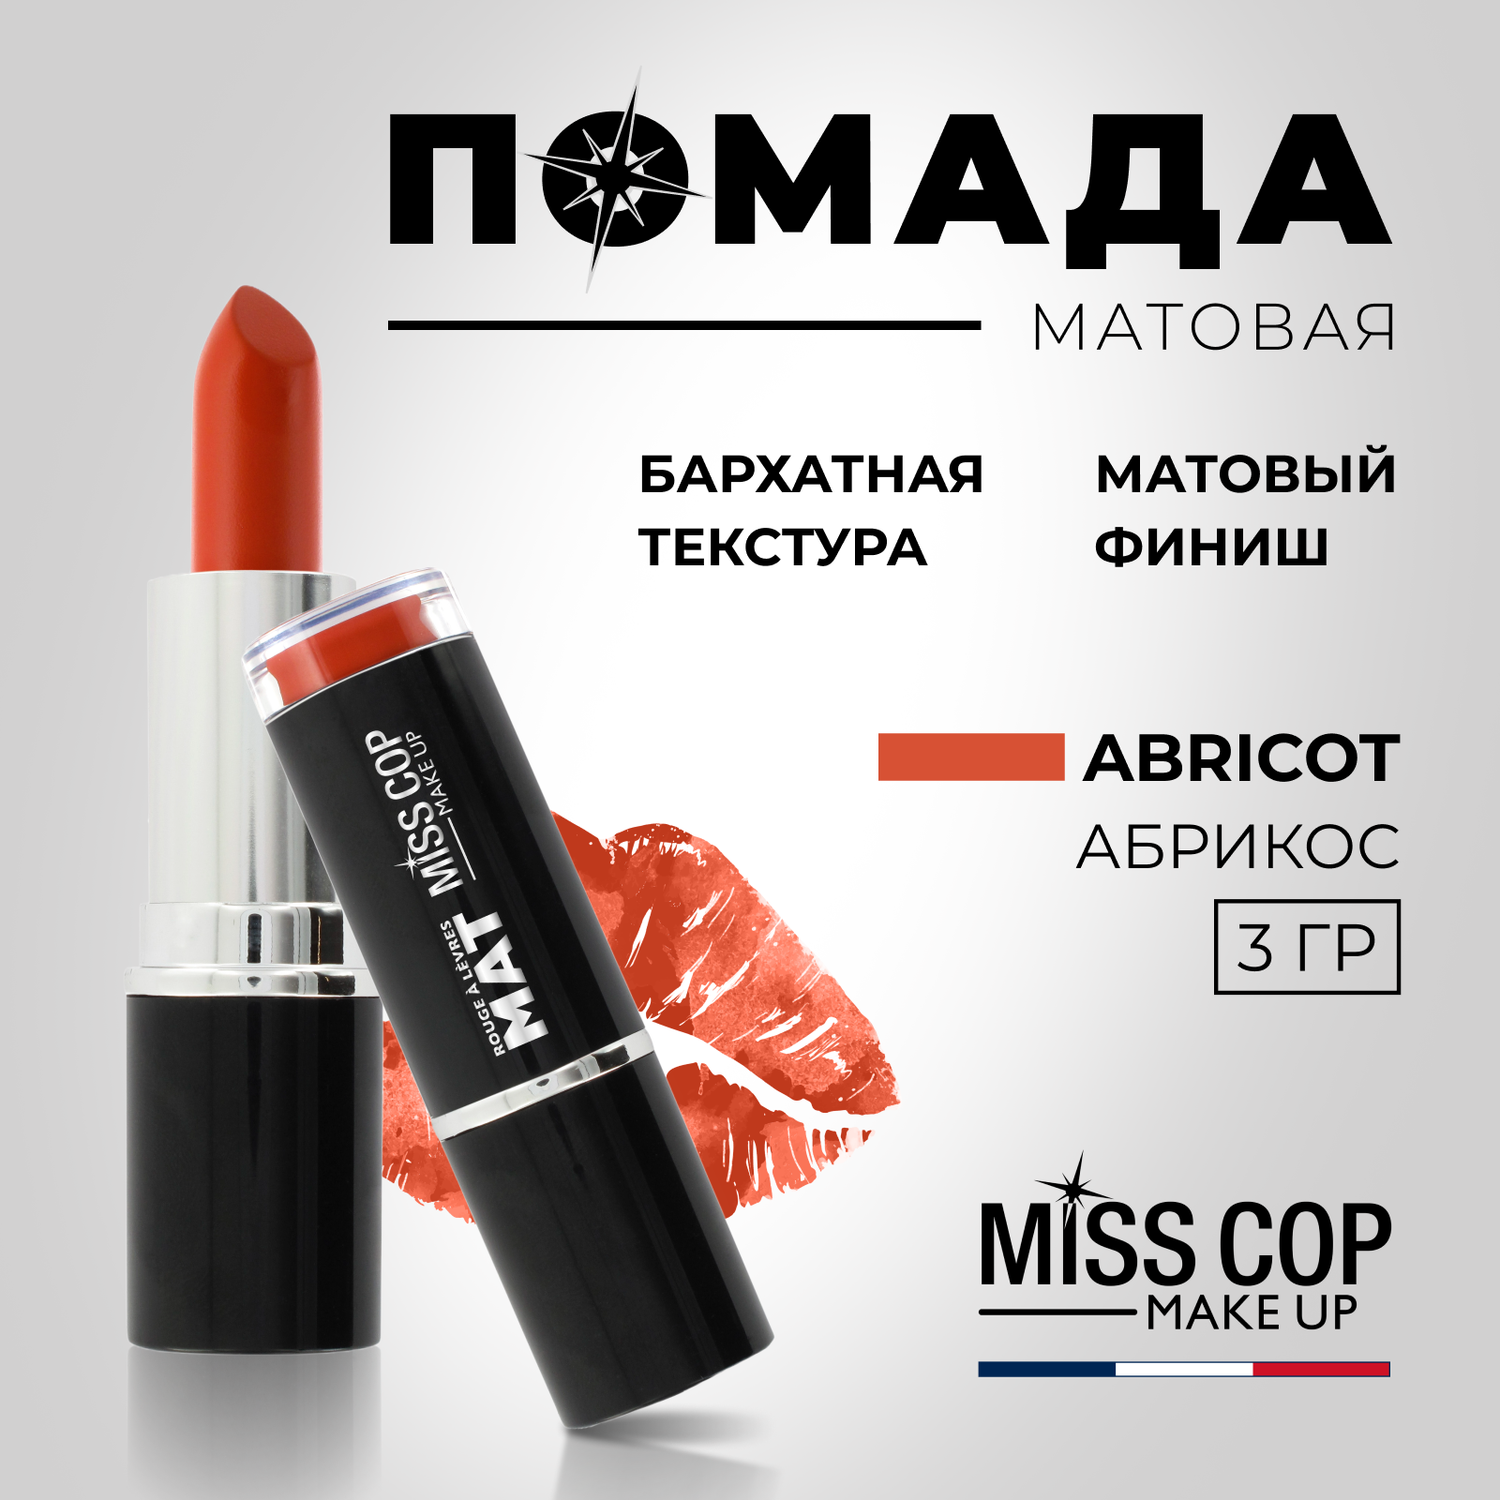 Помада губная матовая Miss Cop Франция цвет 09 Abricot абрикос 3 г - фото 2